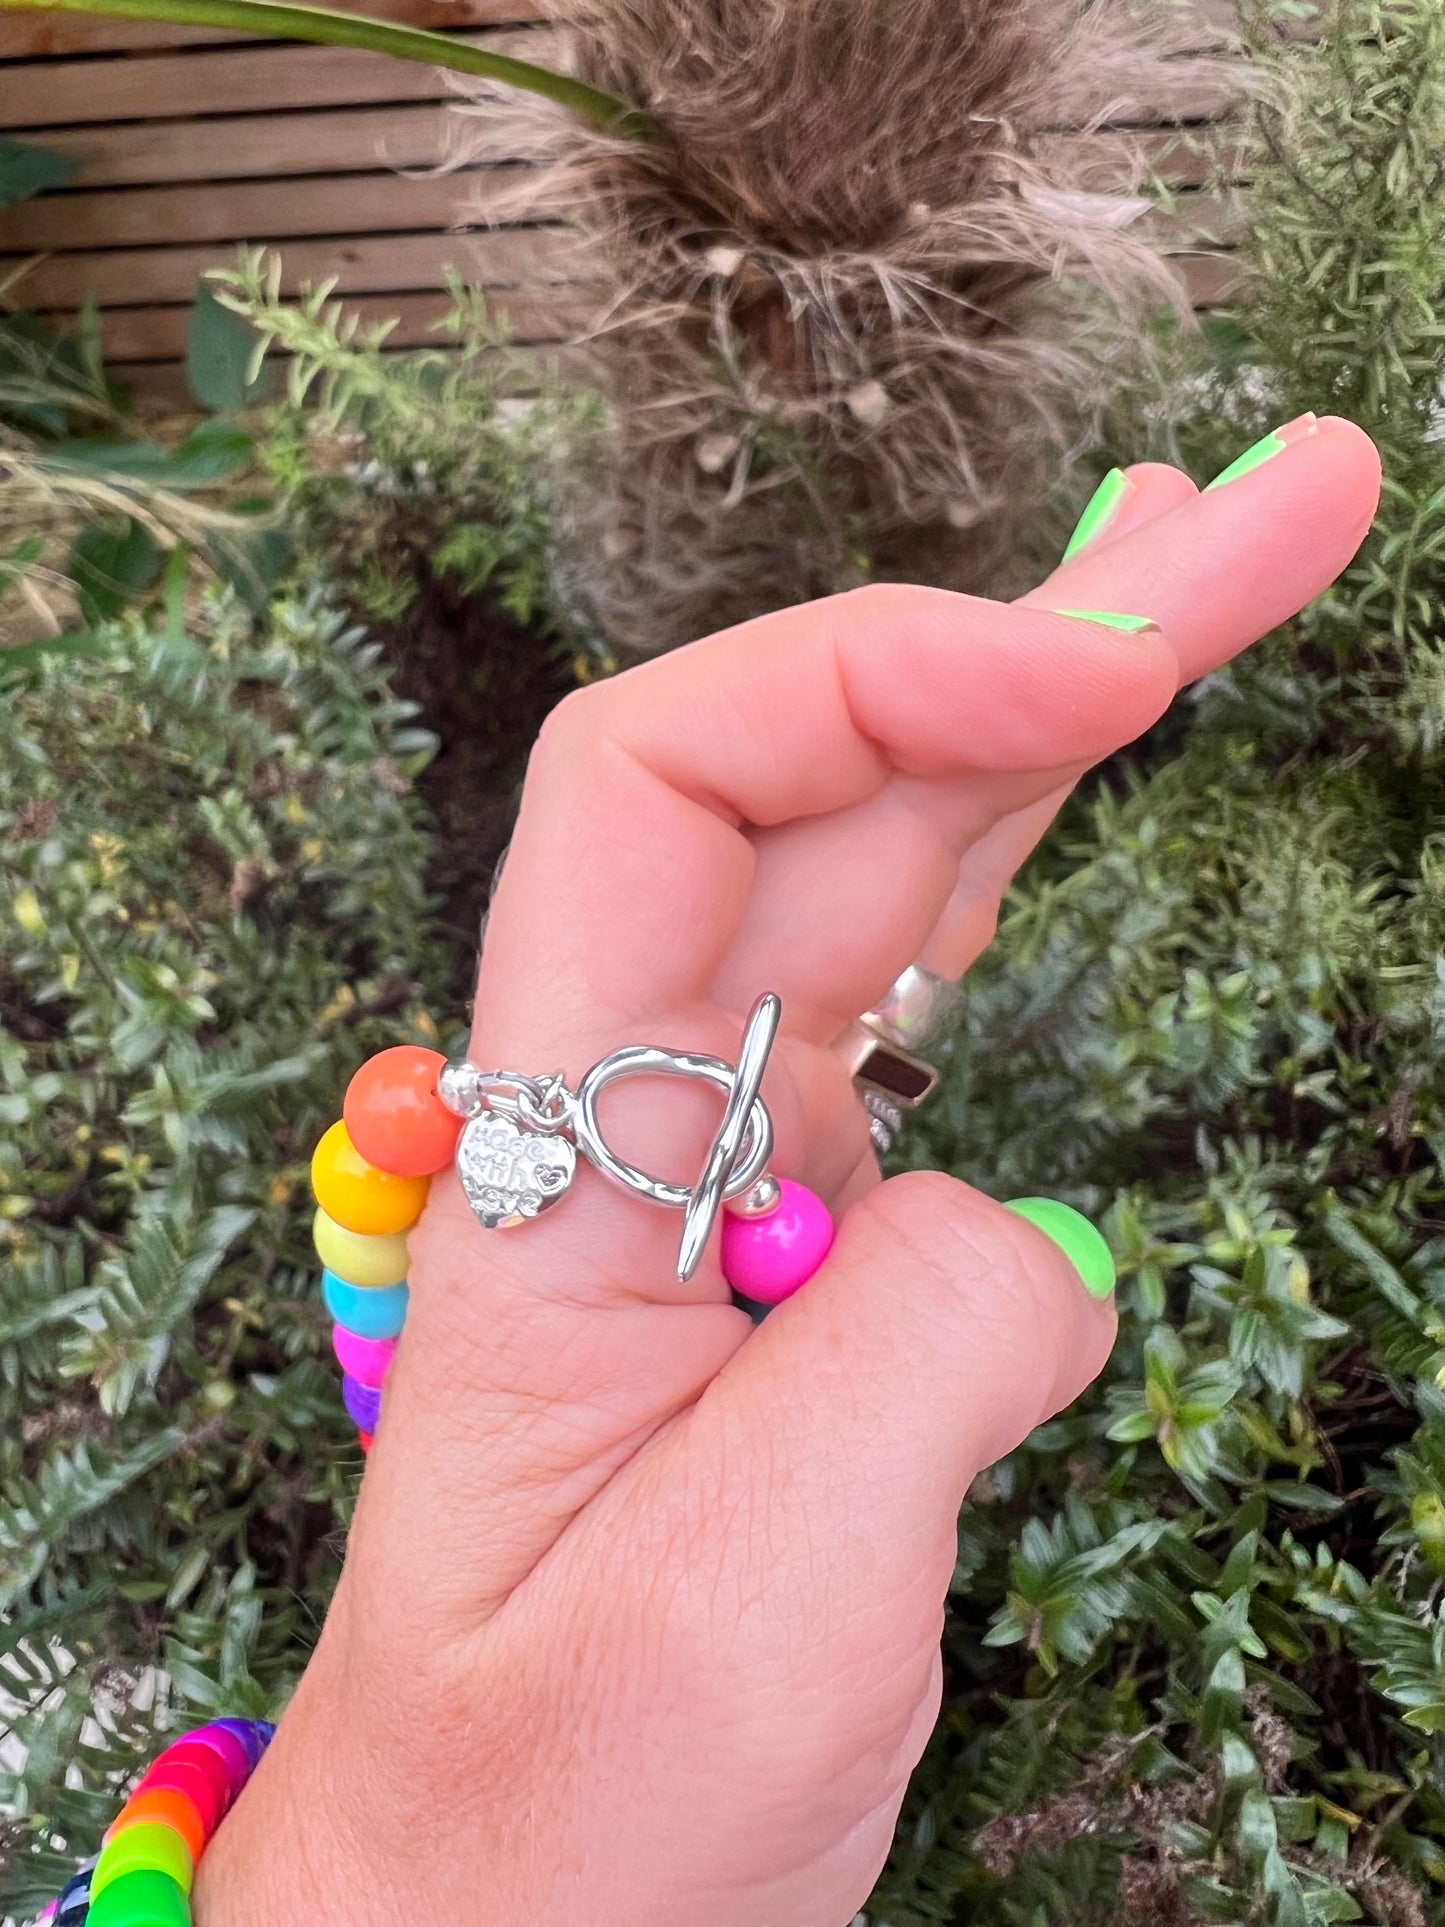 Rainbow Gumball Necklace & Bracelet Set